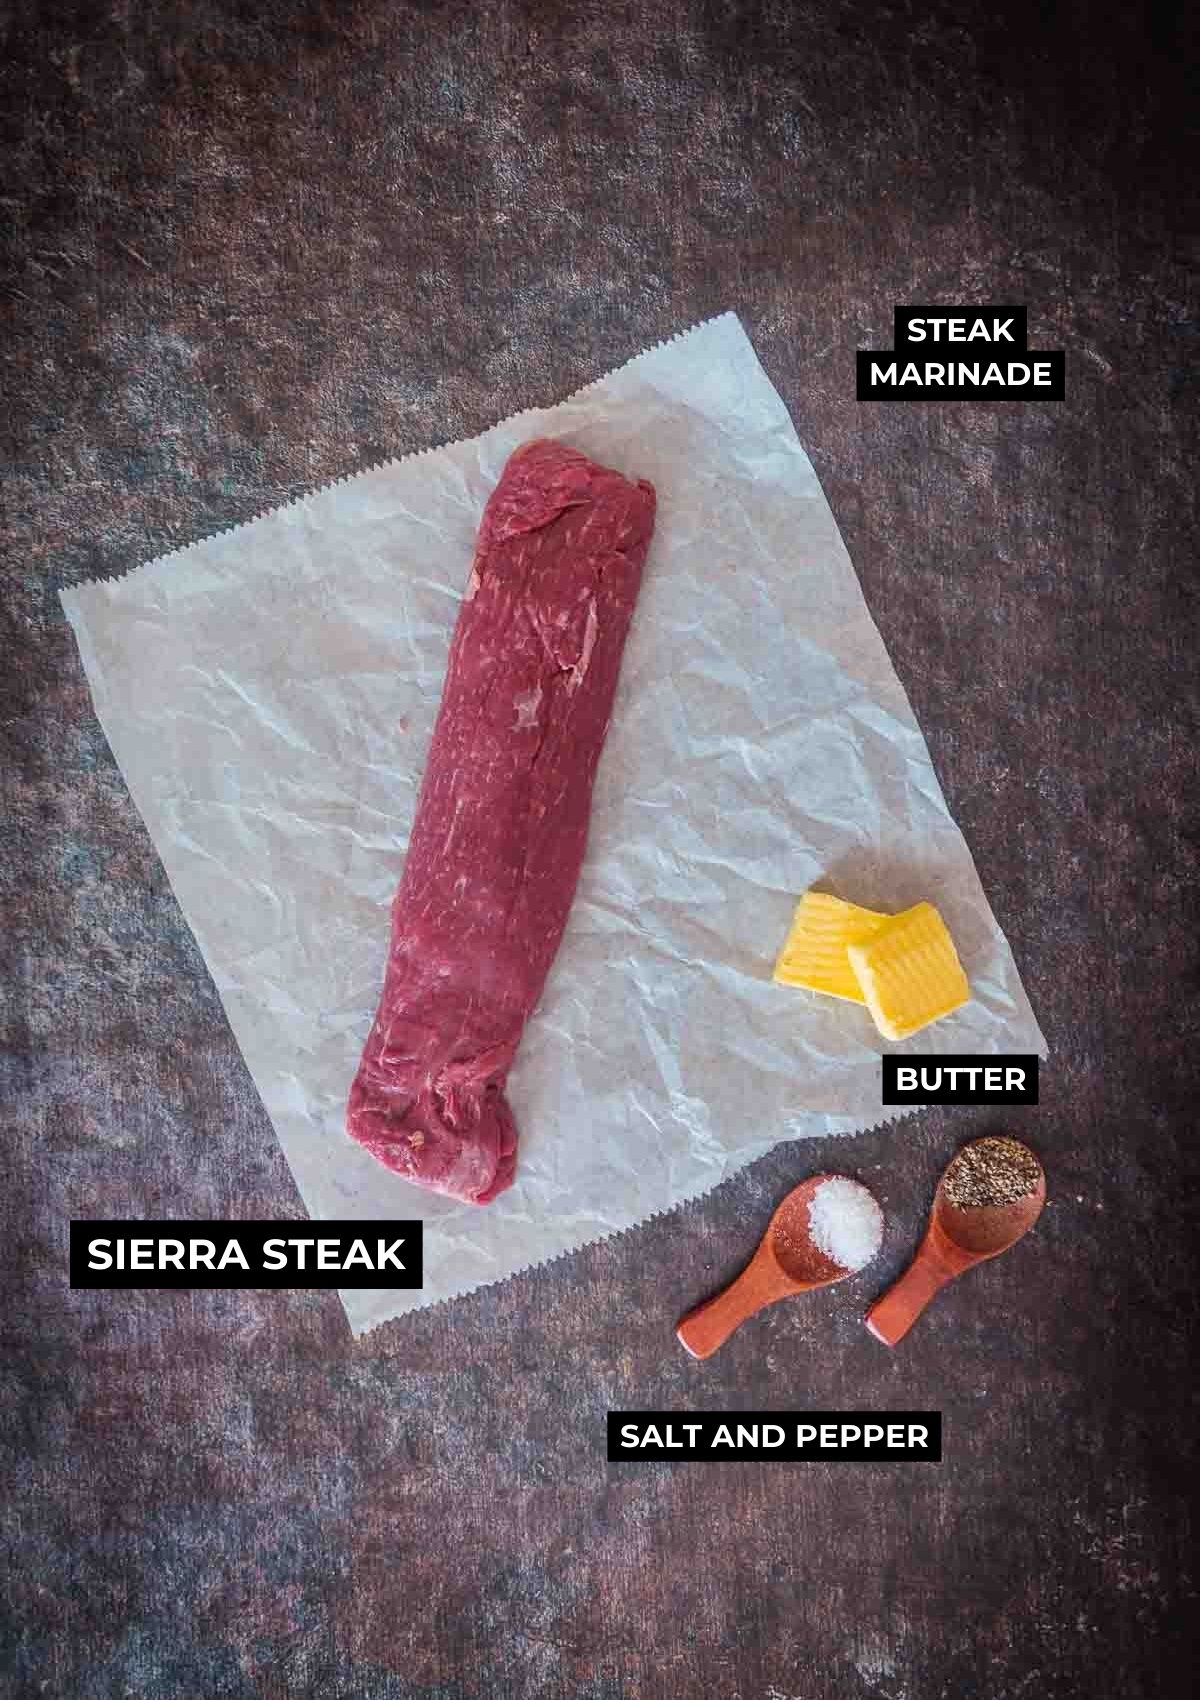 Ingredients for this steak recipe. 